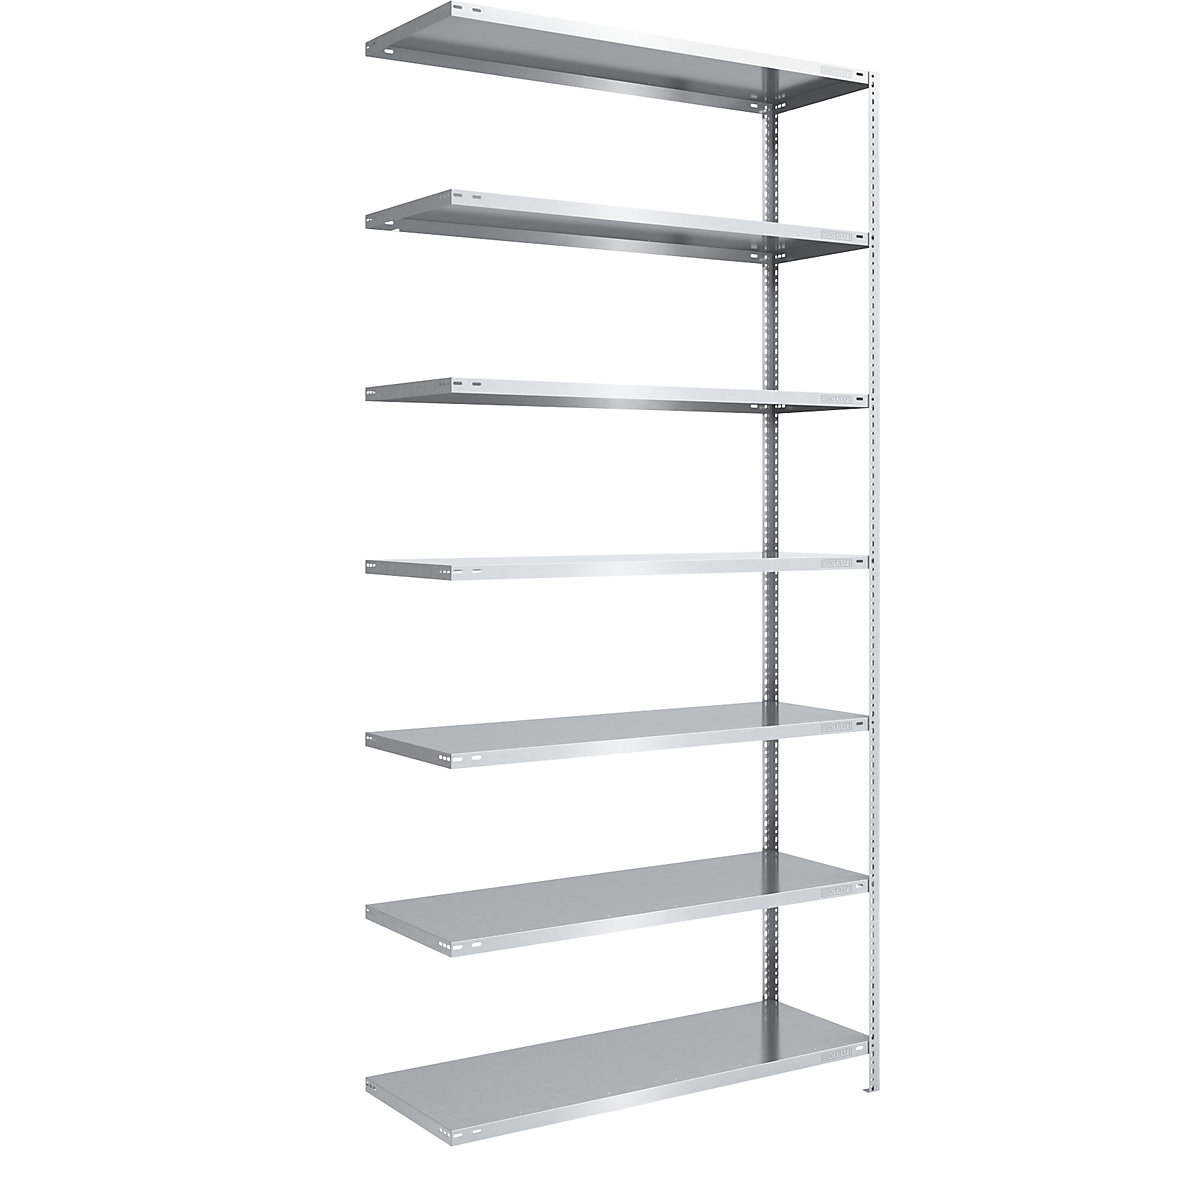 Bolt-together shelf unit, light duty, zinc plated – eurokraft pro, shelf unit height 3000 mm, shelf width 1300 mm, depth 600 mm, extension shelf unit-11